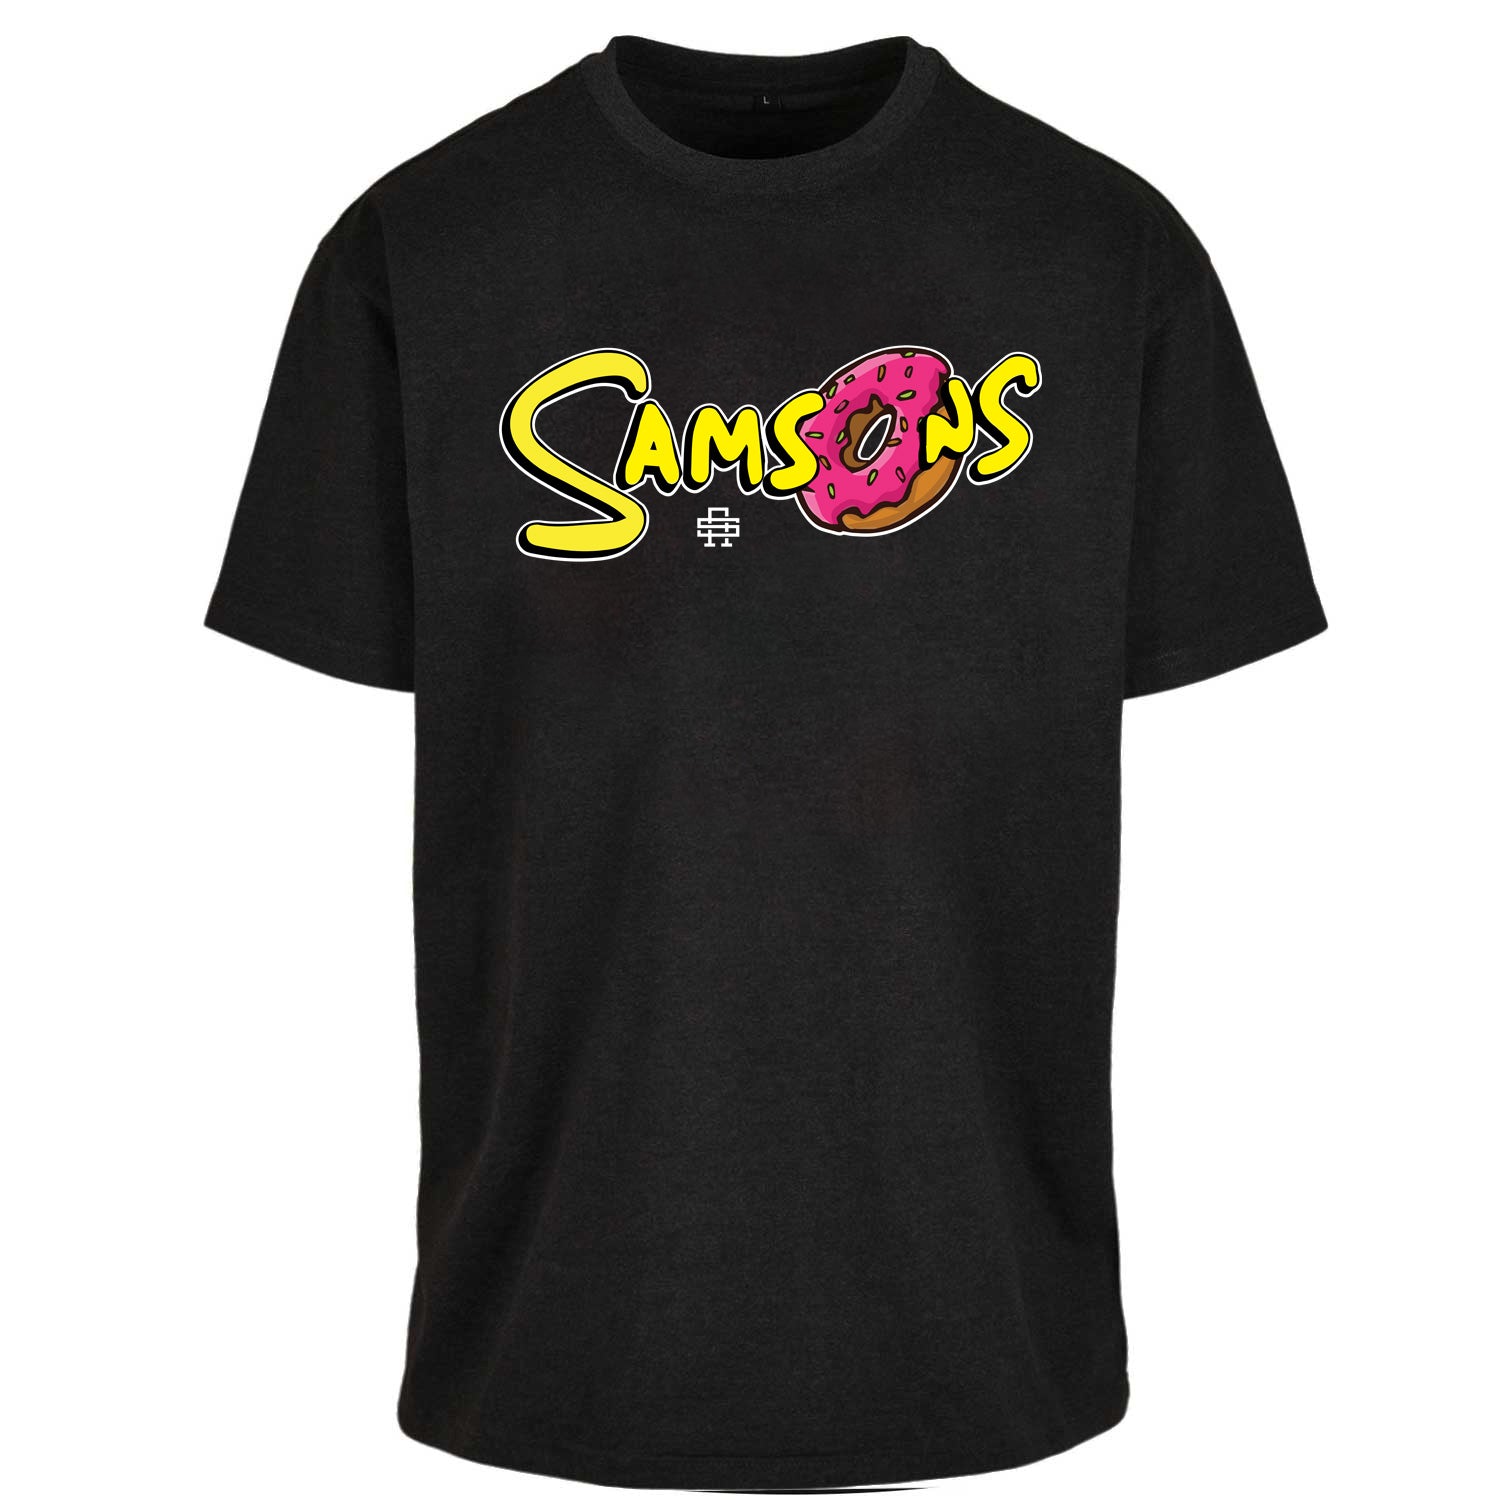 The Samsons Donut Oversized Gym T-Shirt